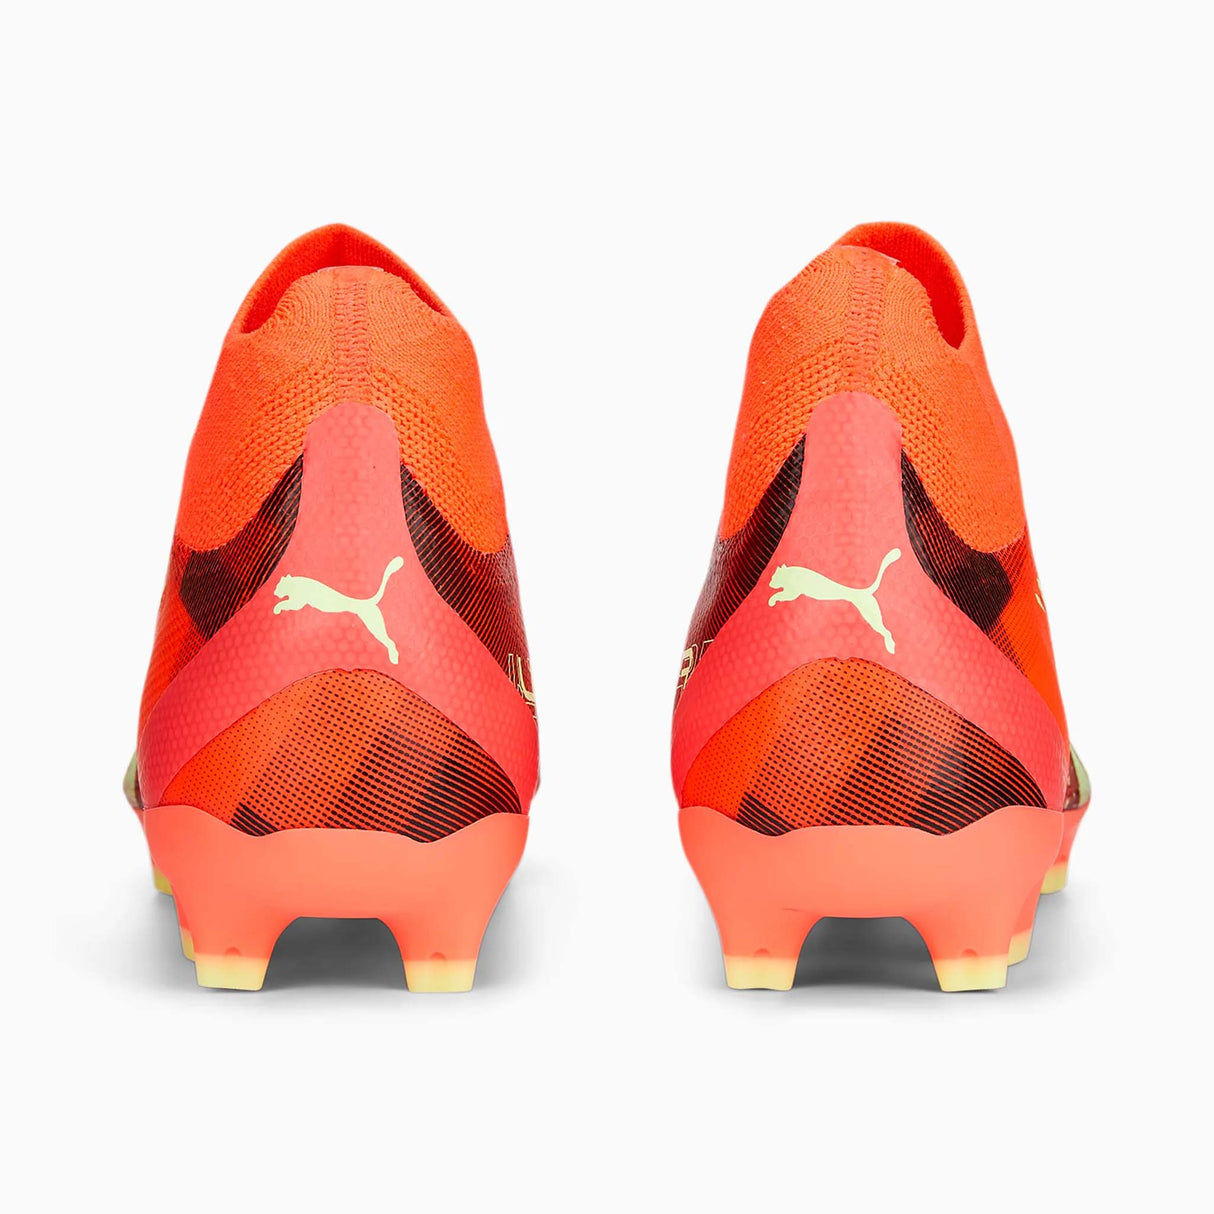 Puma Ultra Pro FG/AG souliers de soccer fiery coral / Fizzy light / Puma black talons